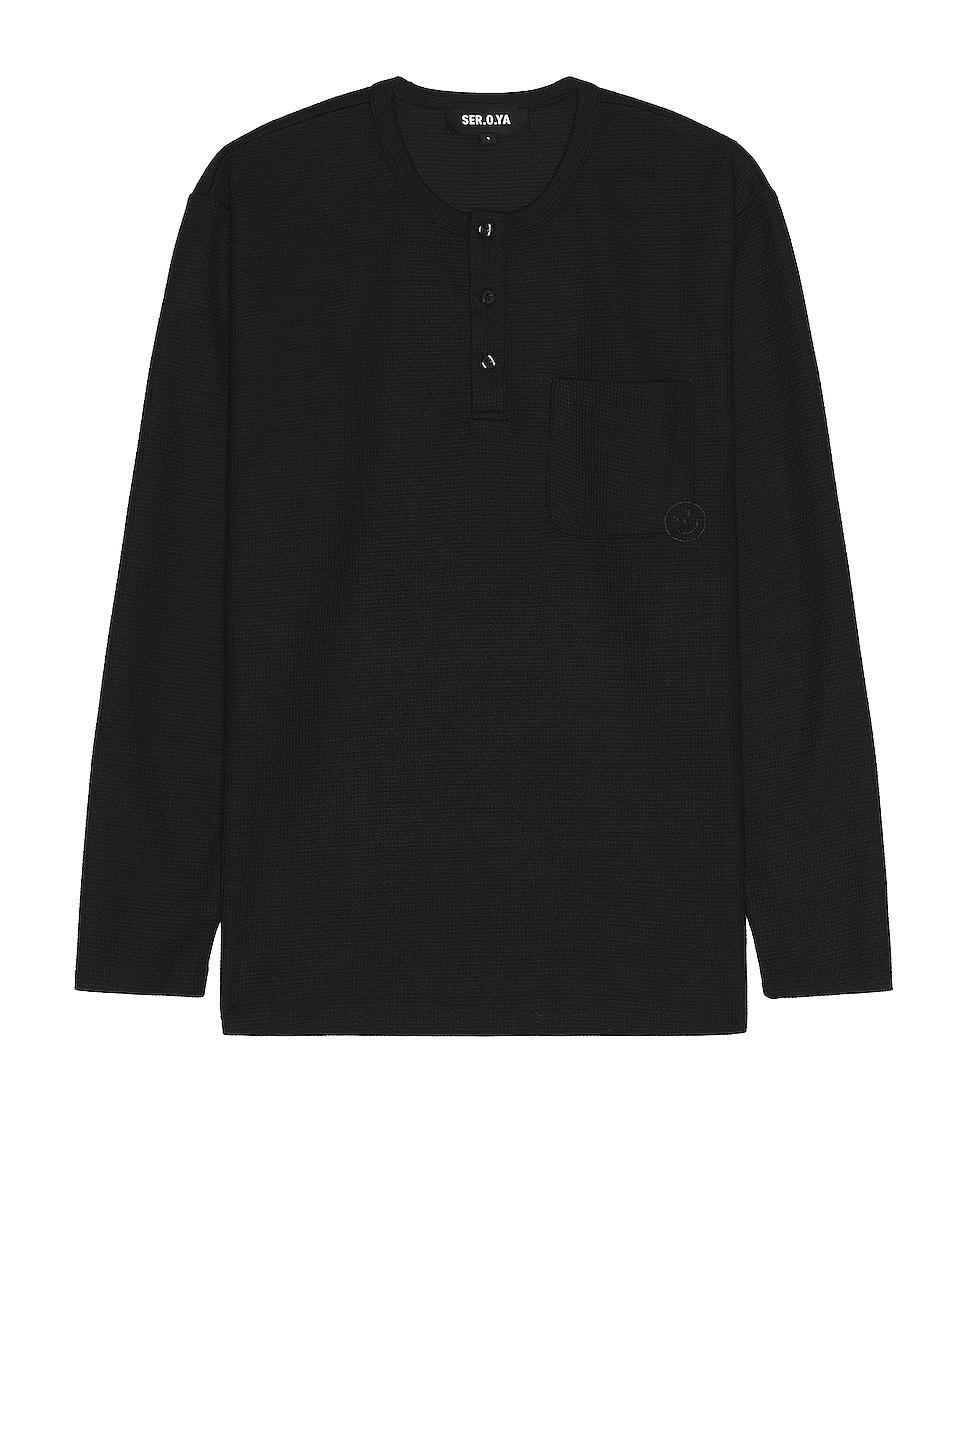 SER.O.YA Victor Long Sleeve Shirt in Black | REVOLVE